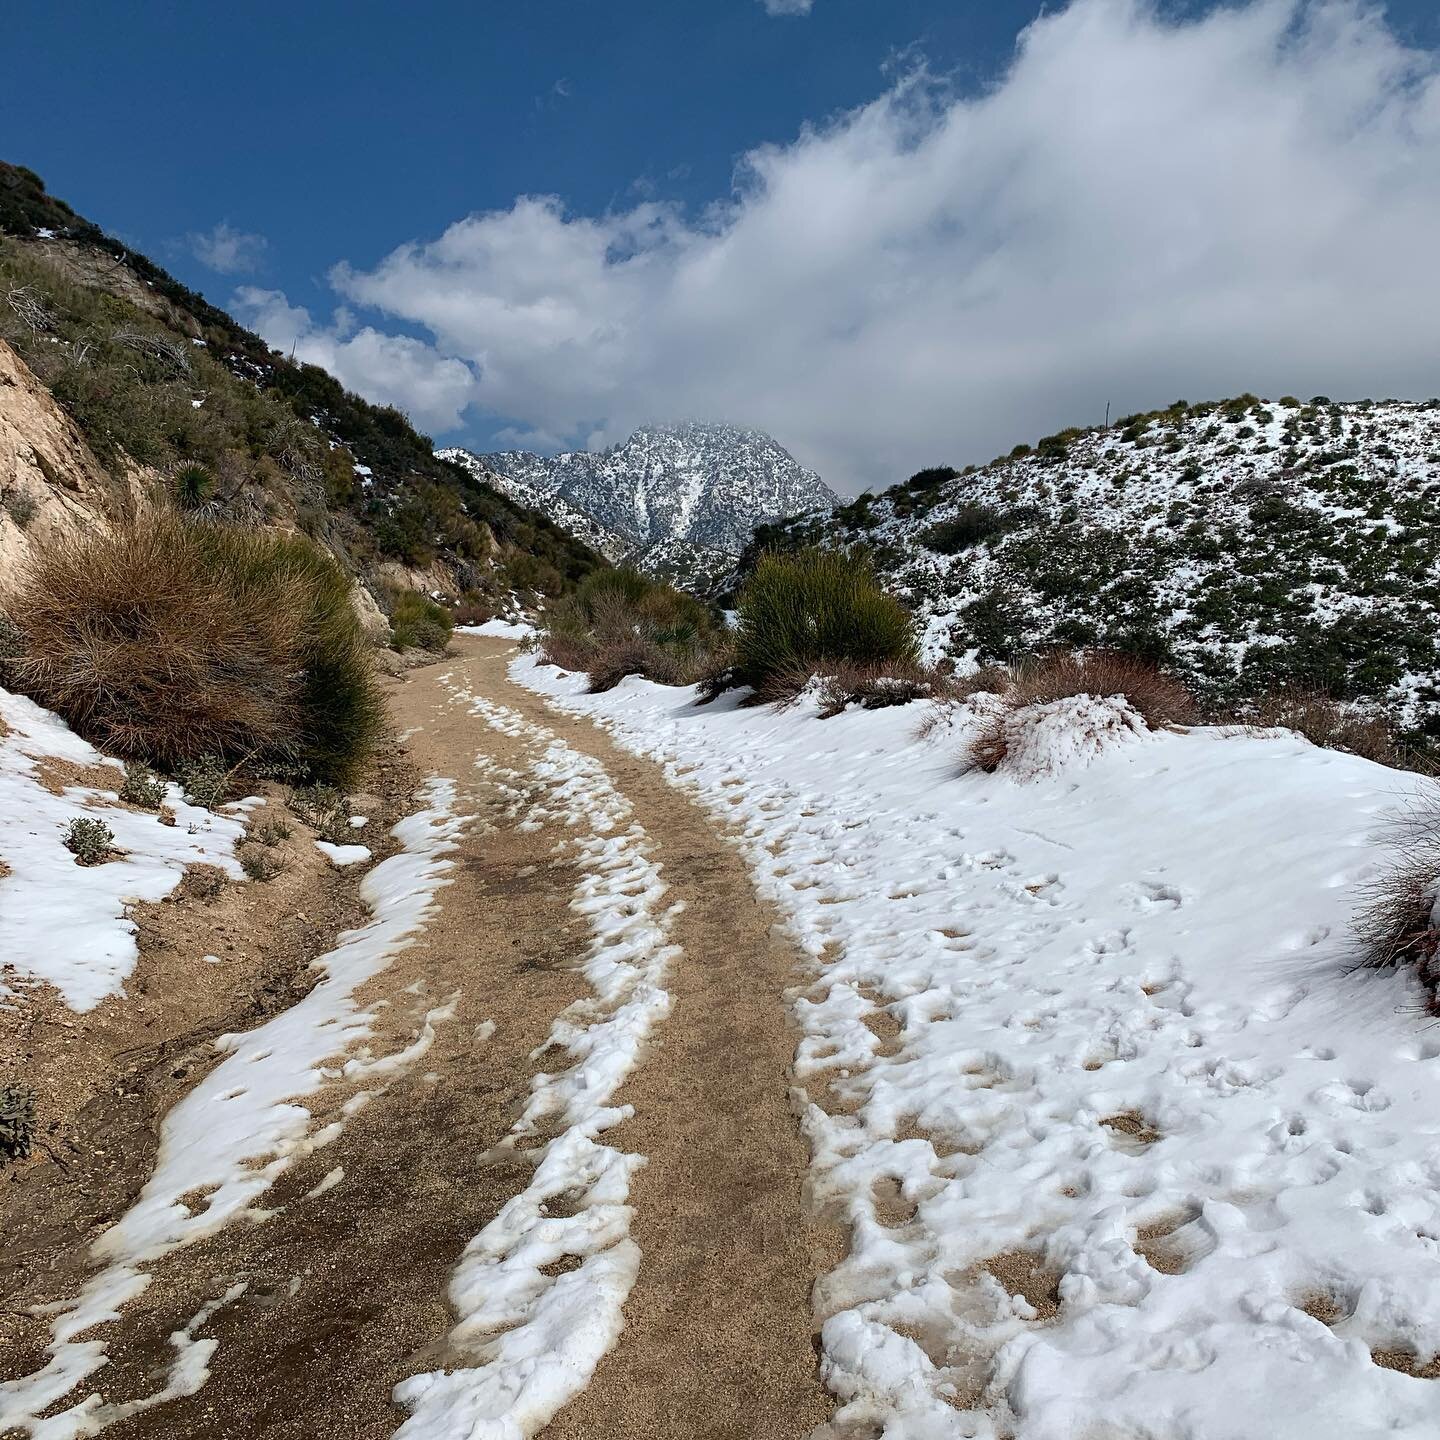 Snowy hike up Josephine Peak